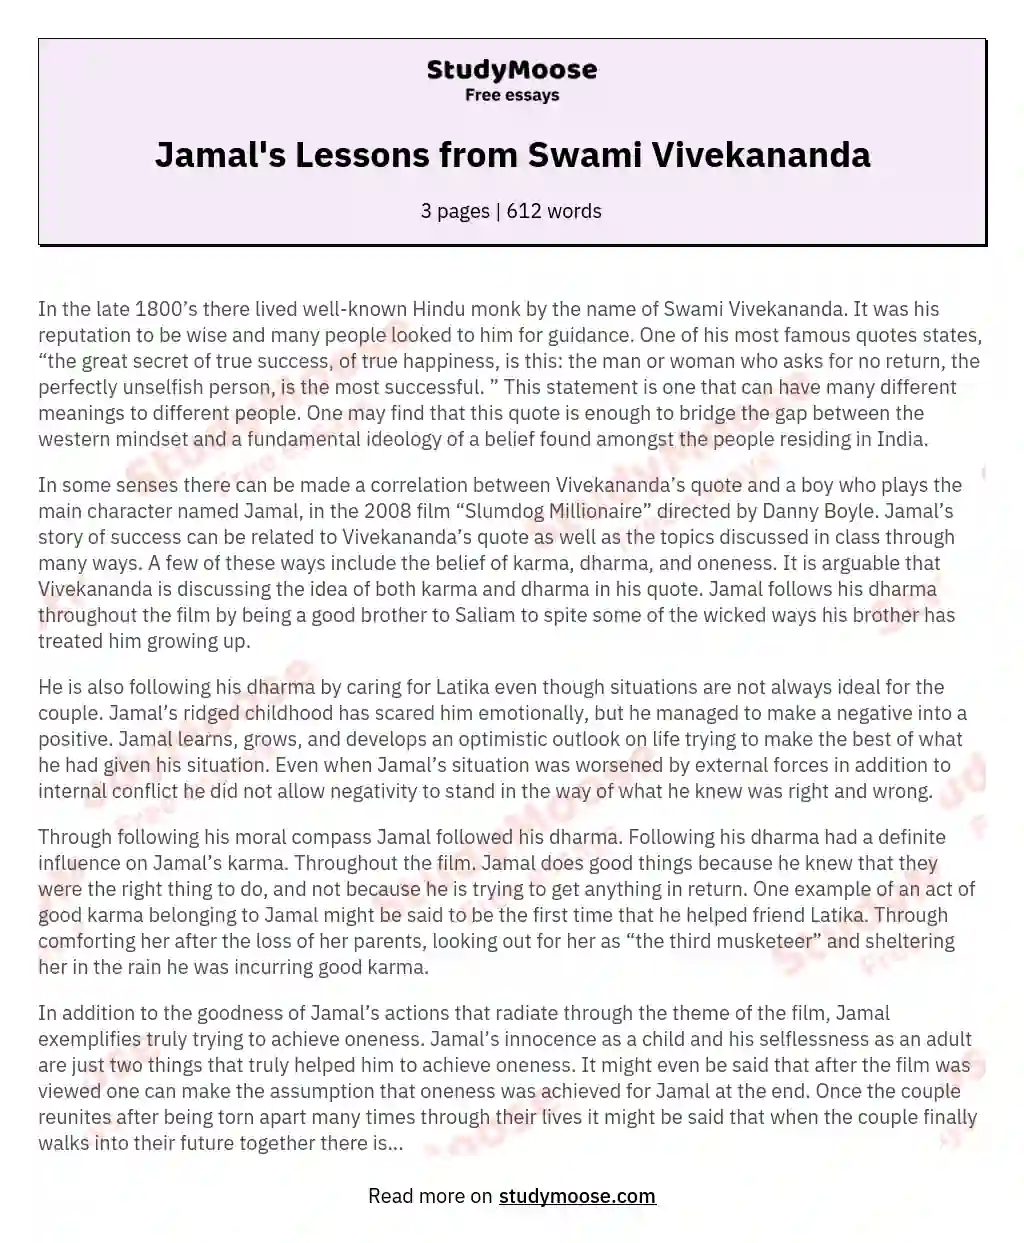 Jamal's Lessons from Swami Vivekananda essay